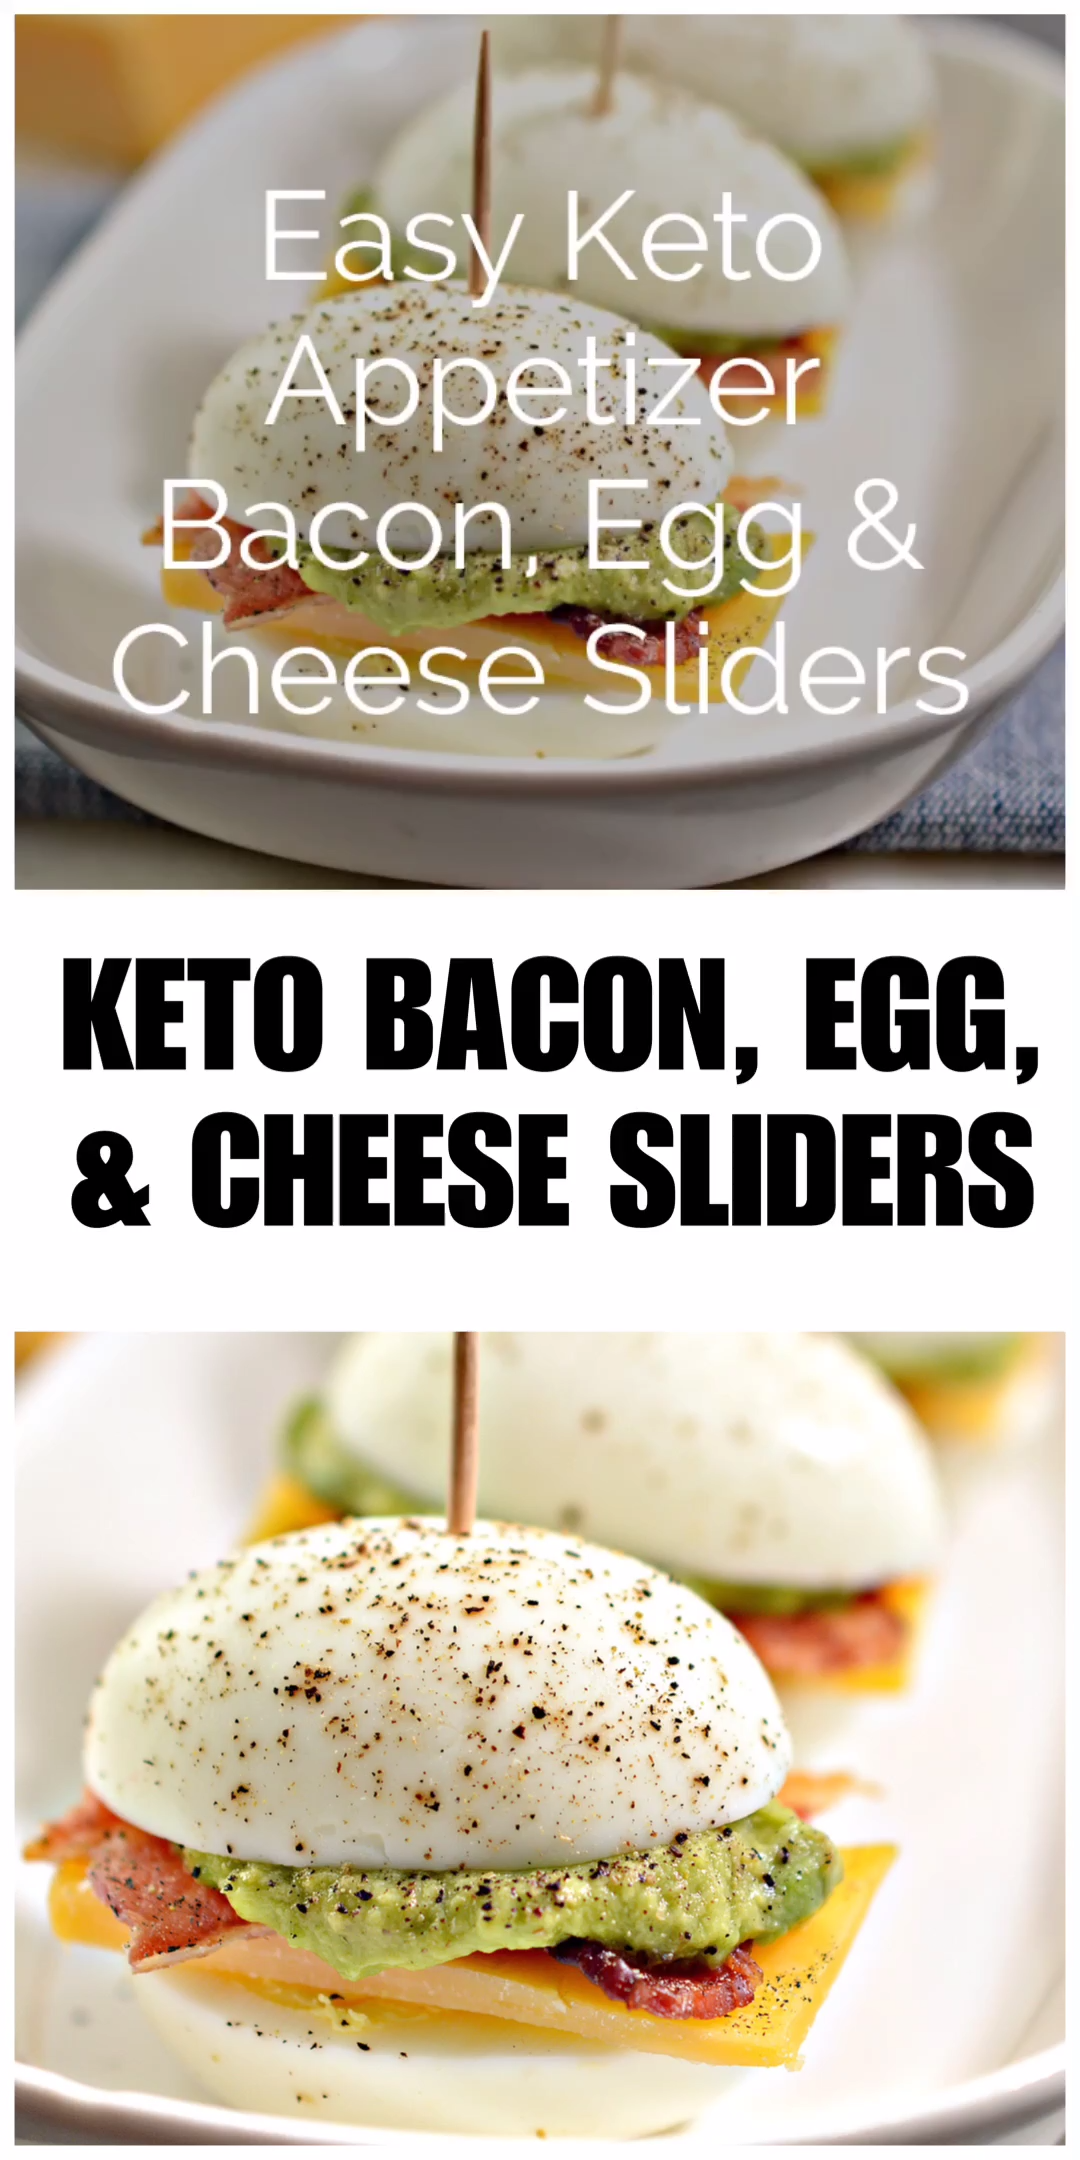 Keto Appetizer - Bacon, Egg & Cheese Sliders -   24 diet Snacks videos ideas